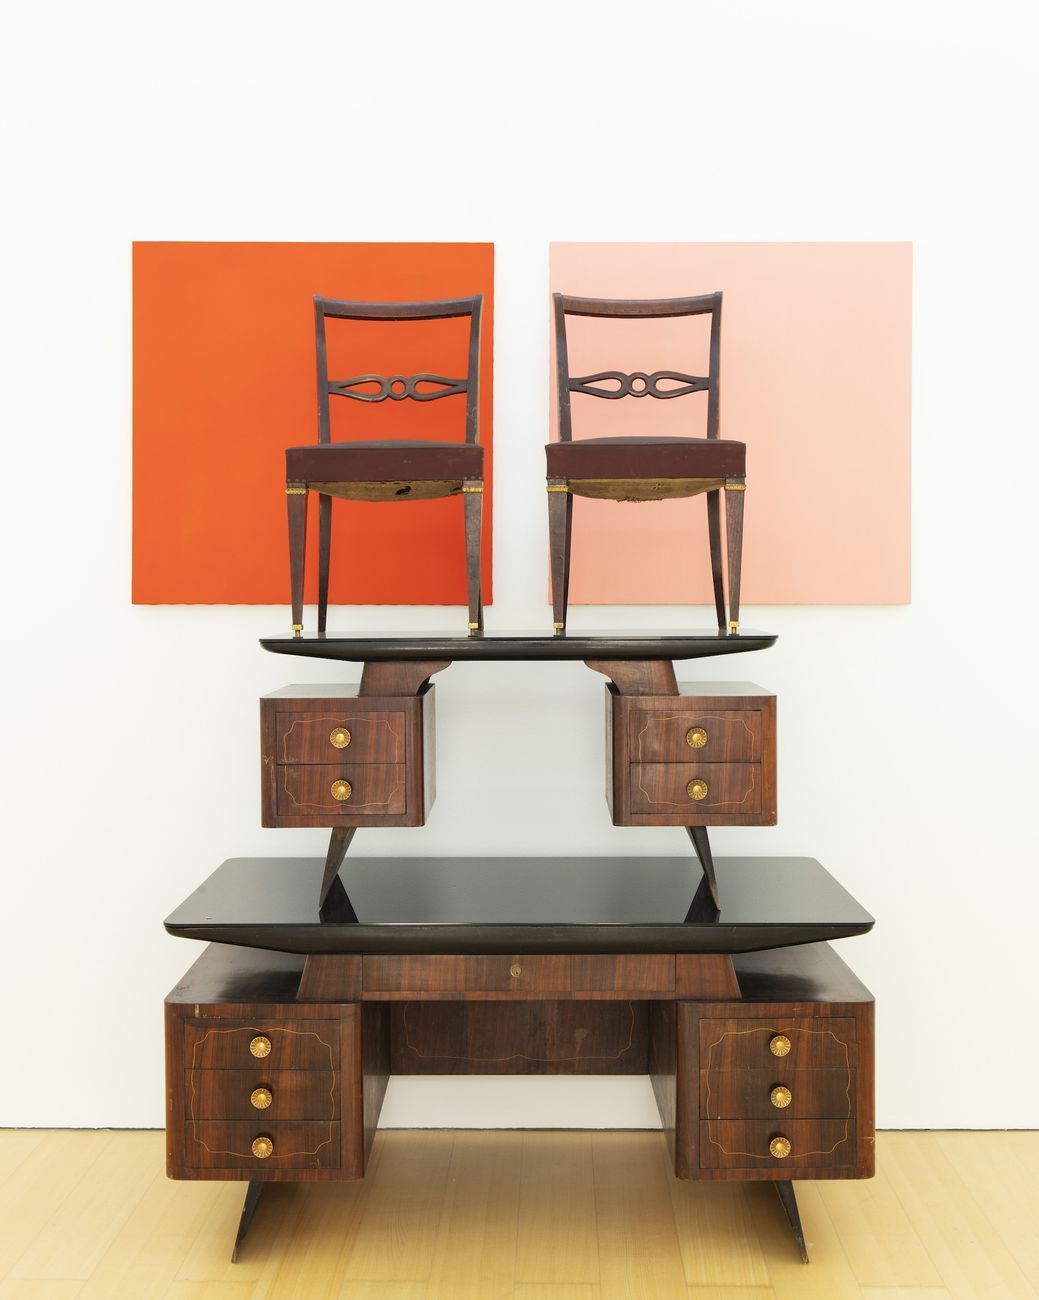 John Armleder, Furniture Sculpture 254, 1991